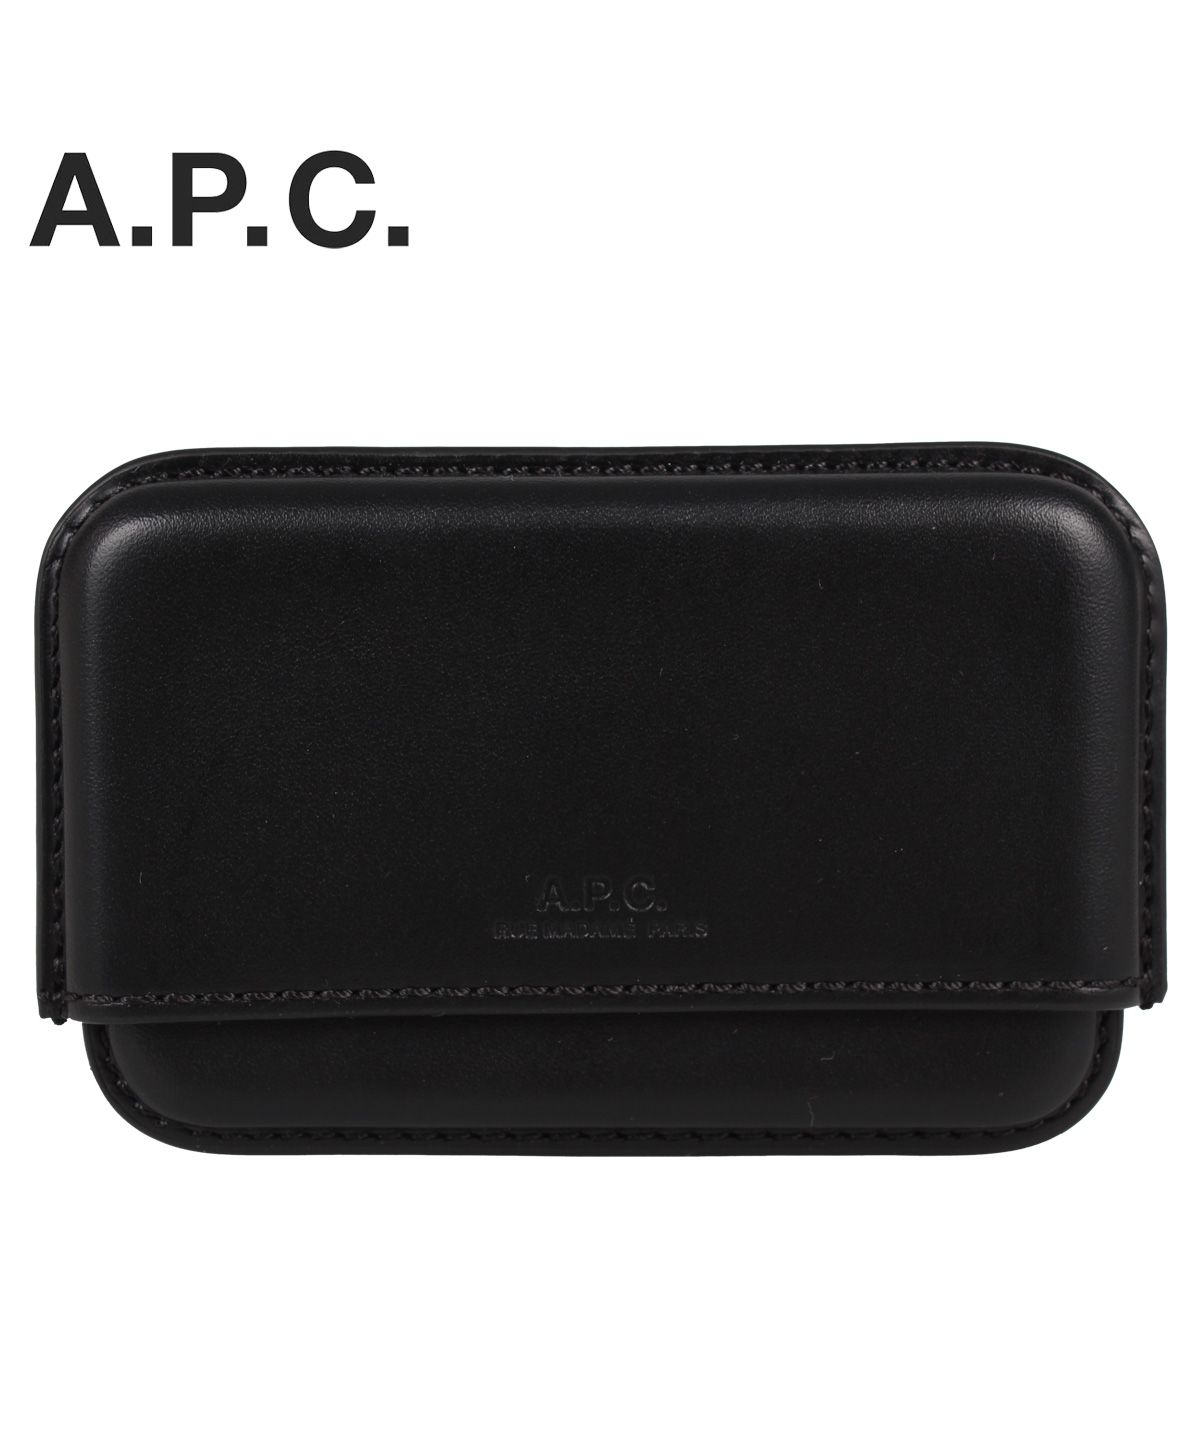 A.P.C.カードケース アーペーセー - コインケース